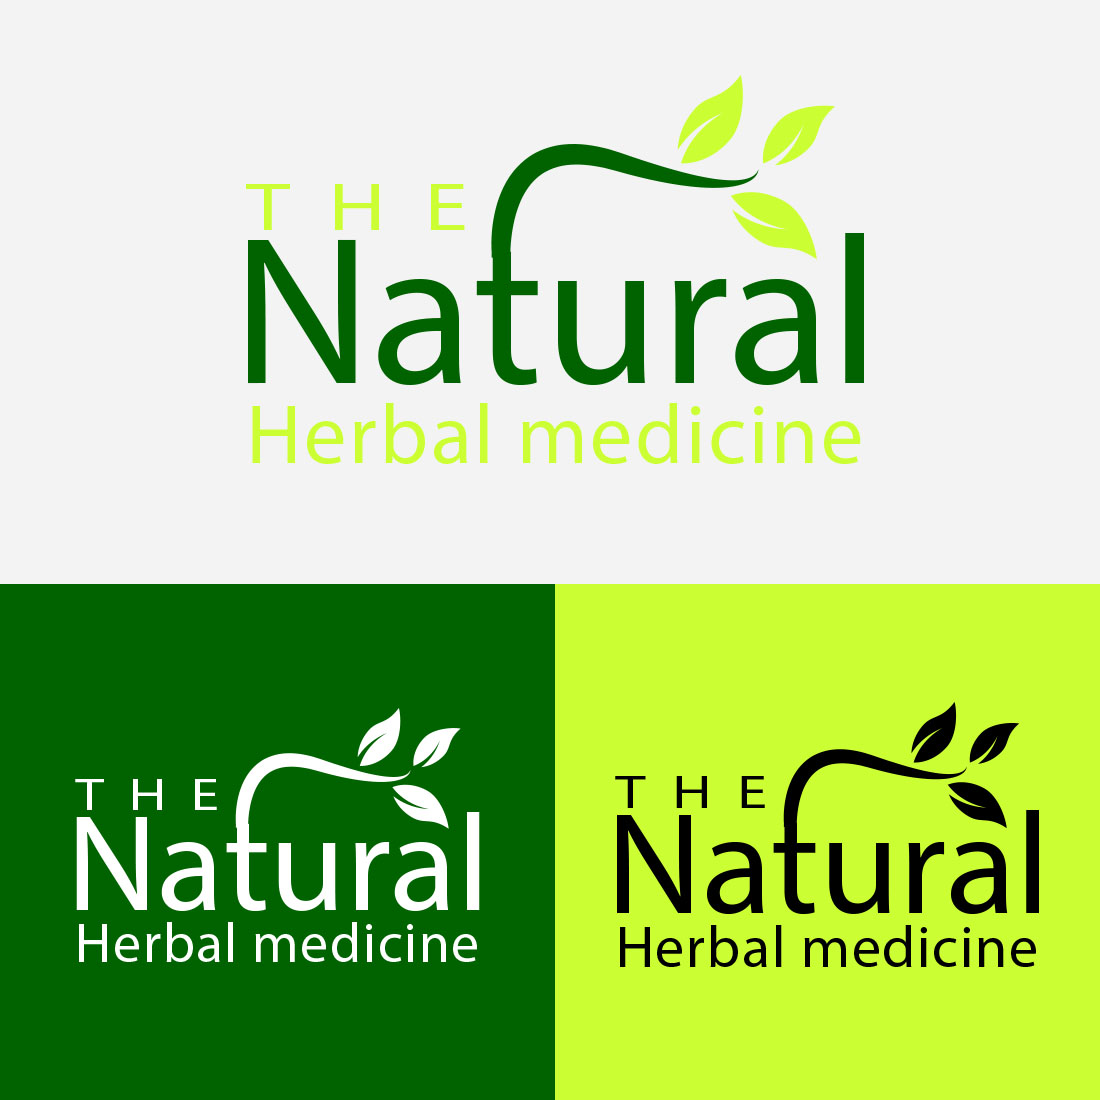 Natural Herbal Medicine Logo cover image.